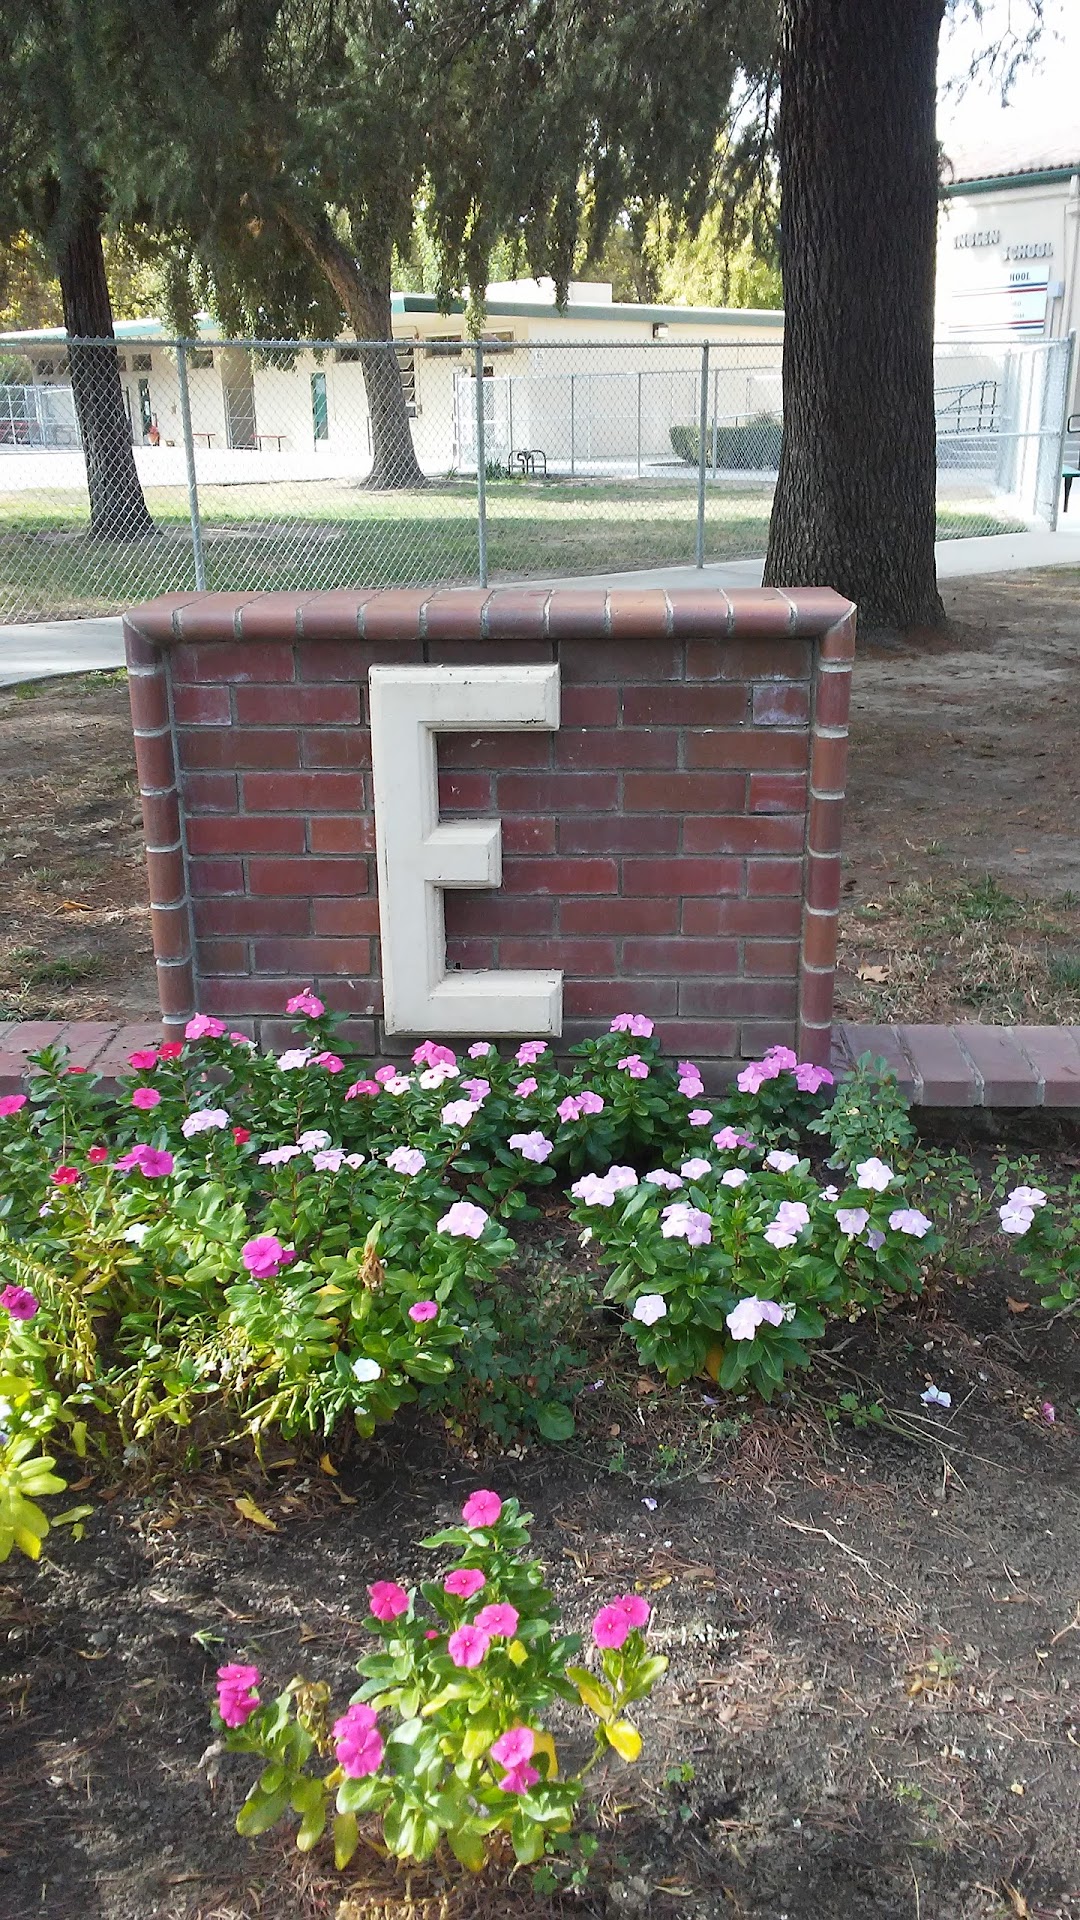 Enslen Elementary School